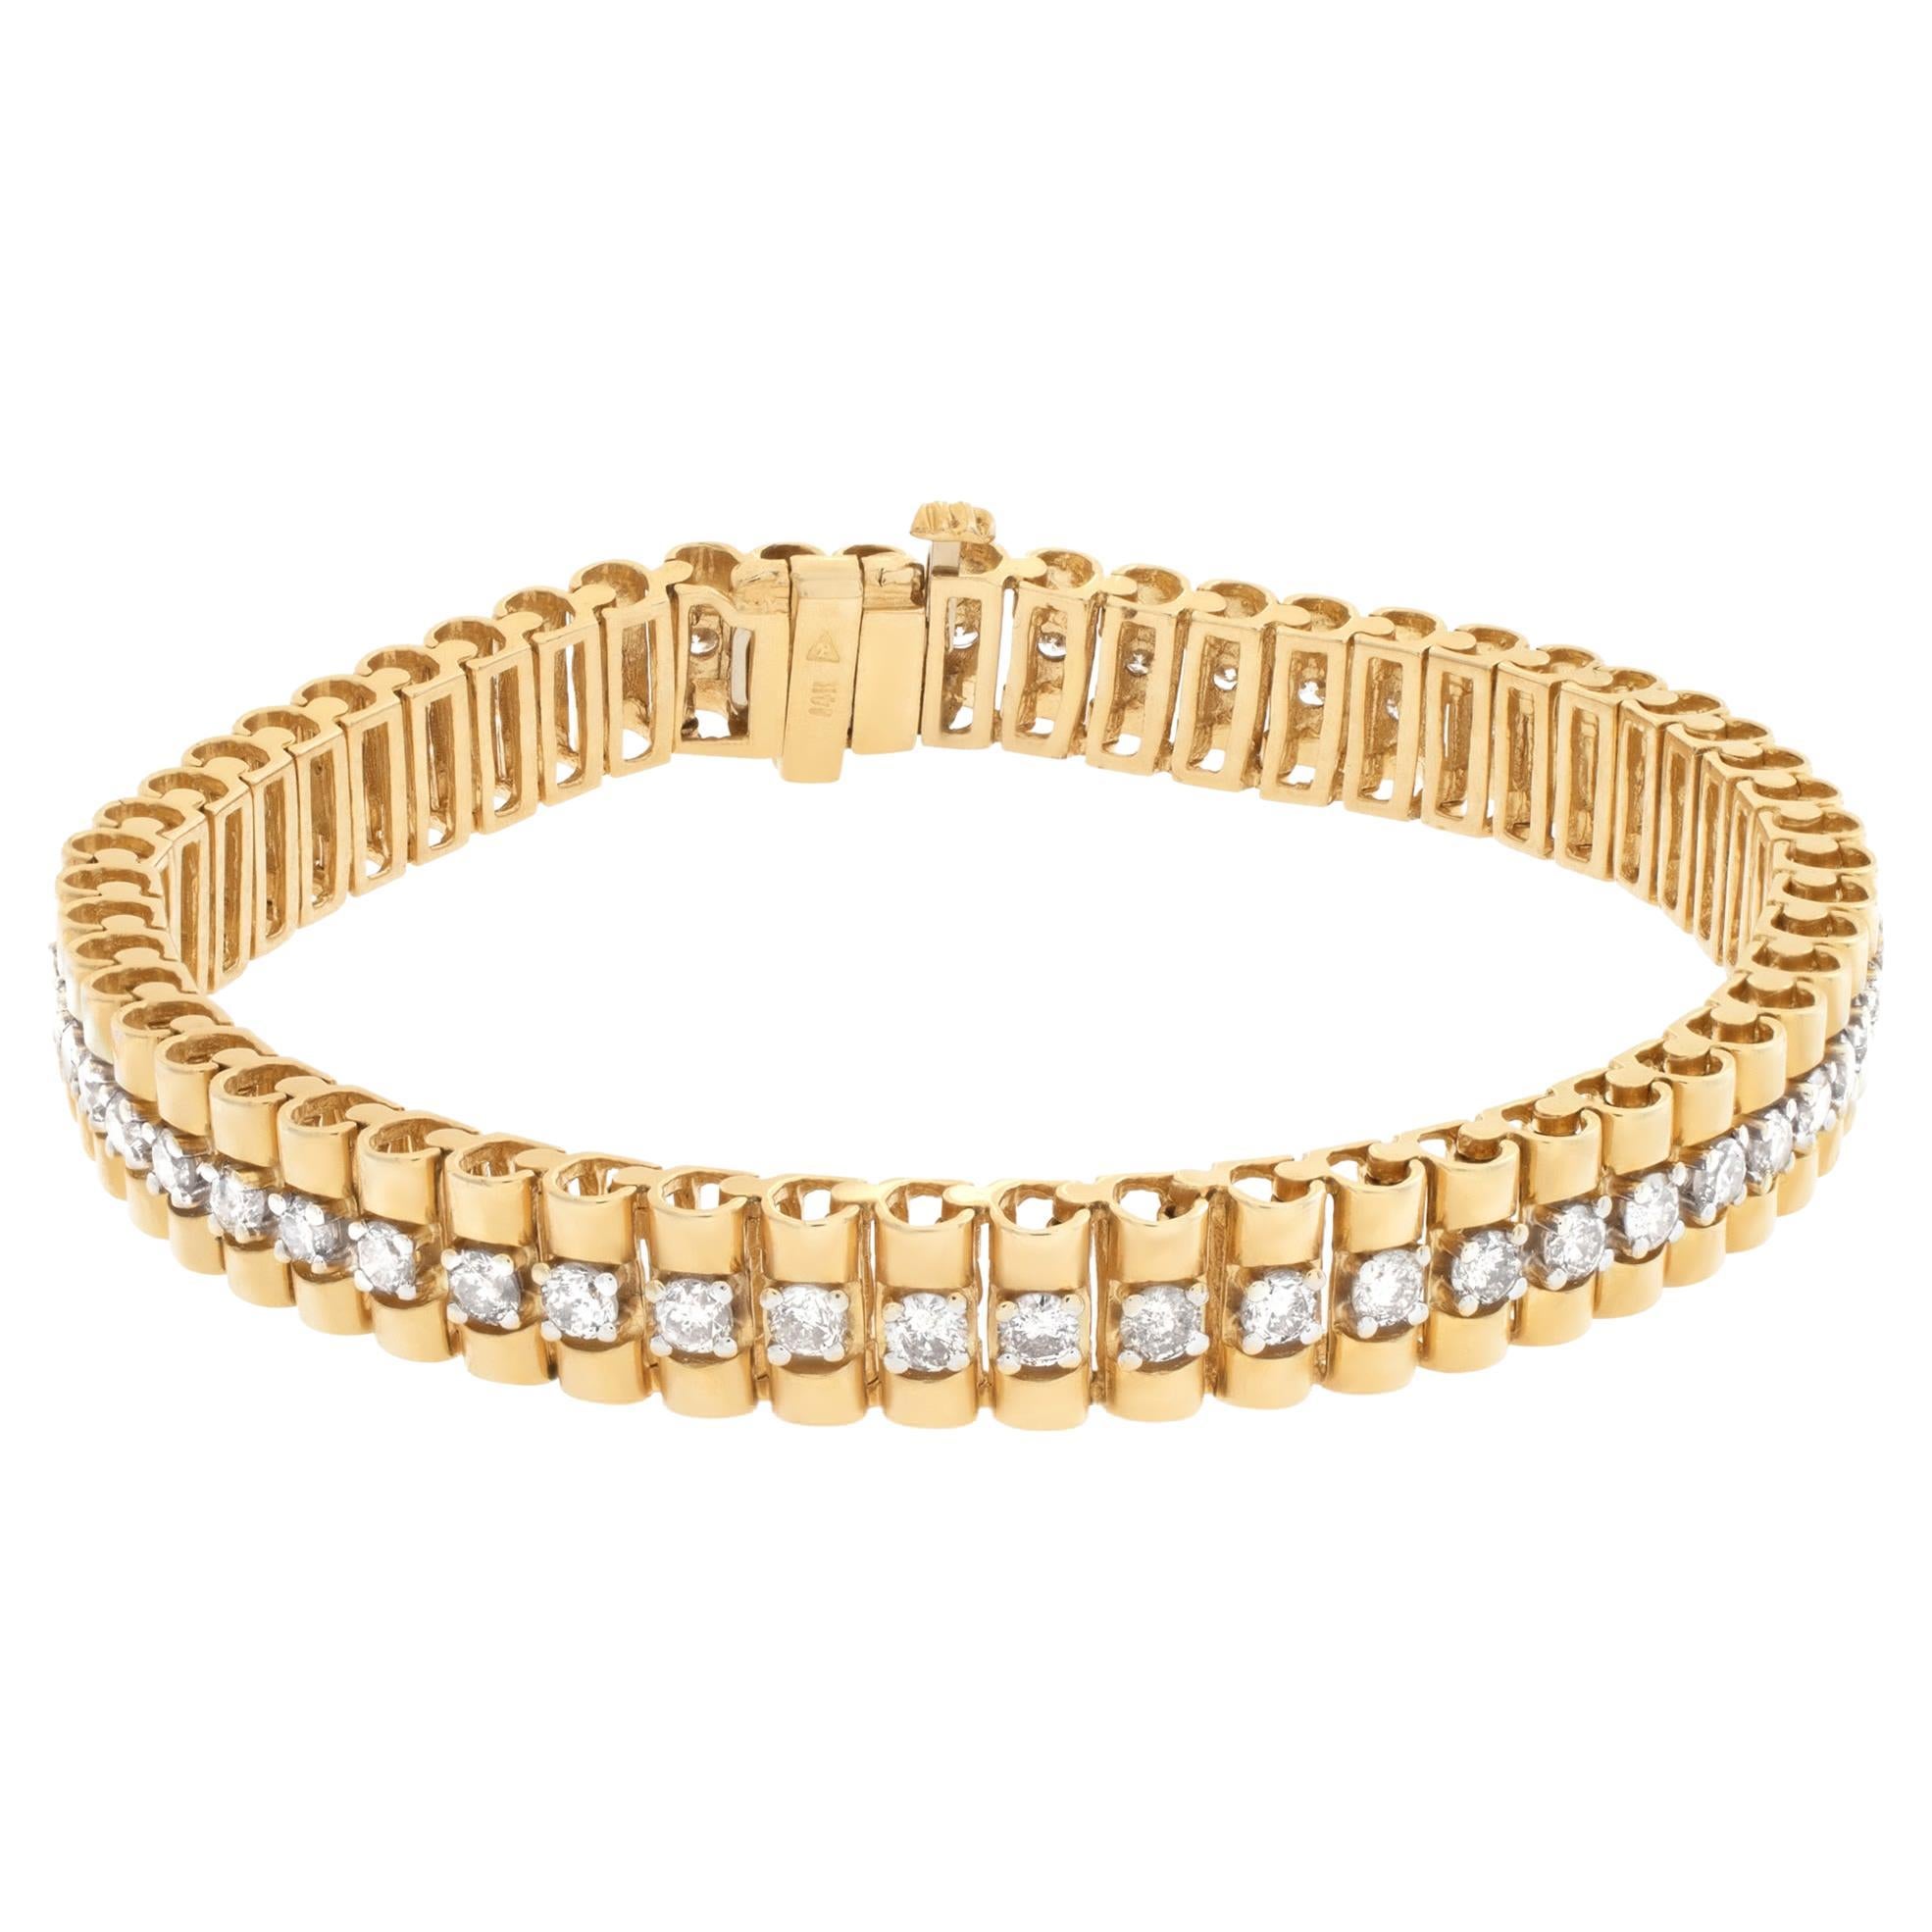 Stylish president style link bracelet with approximately 3 carats full cut round